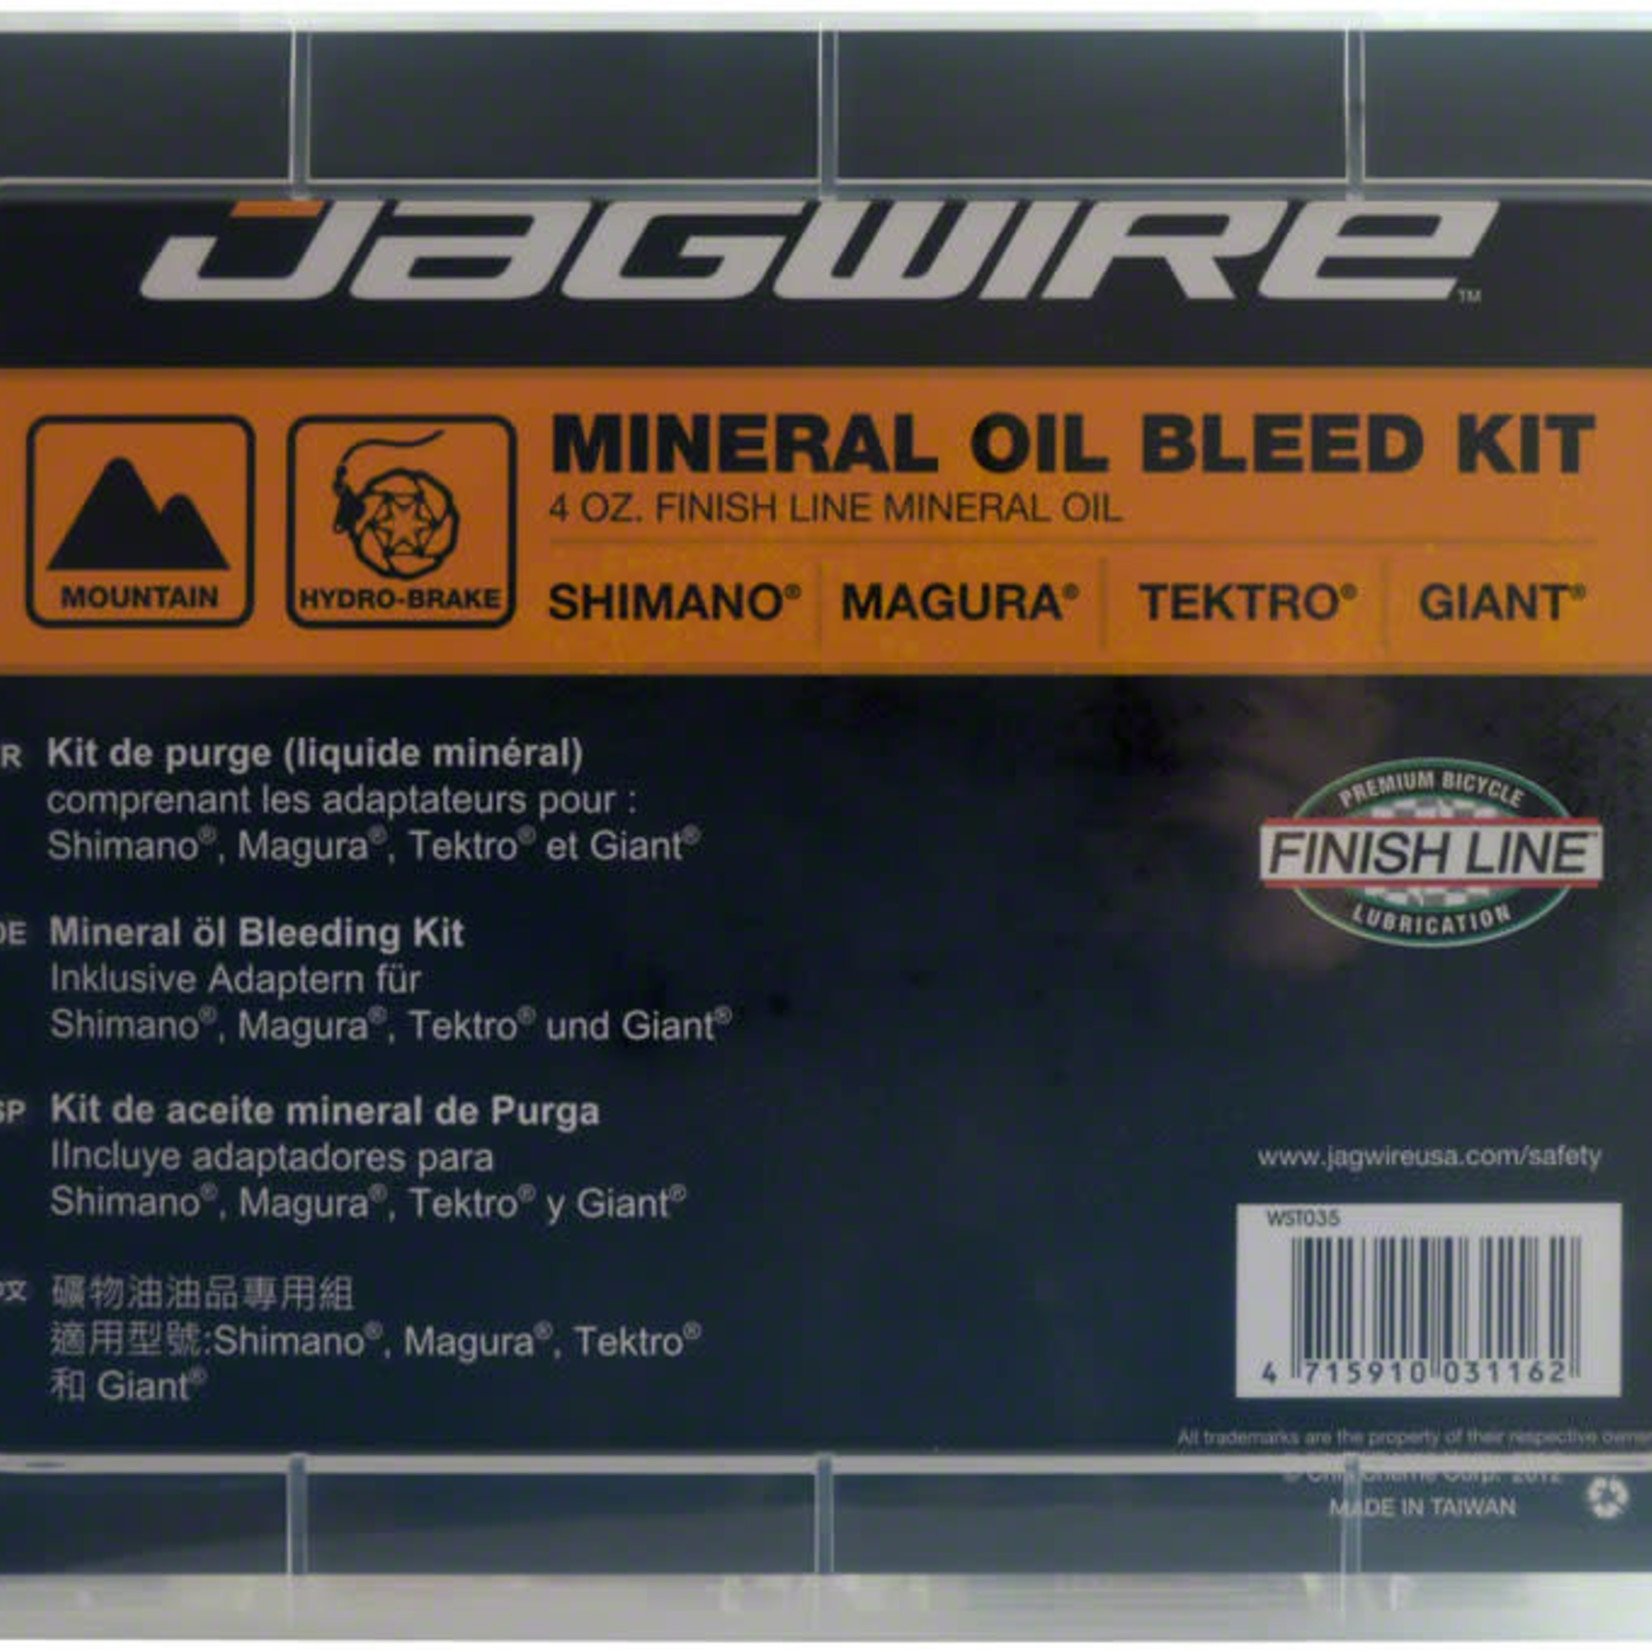 Jagwire Jagwire Pro Mineral Oil Bleed Kit Includes Shimano Magura Tektro Giant Adaptors